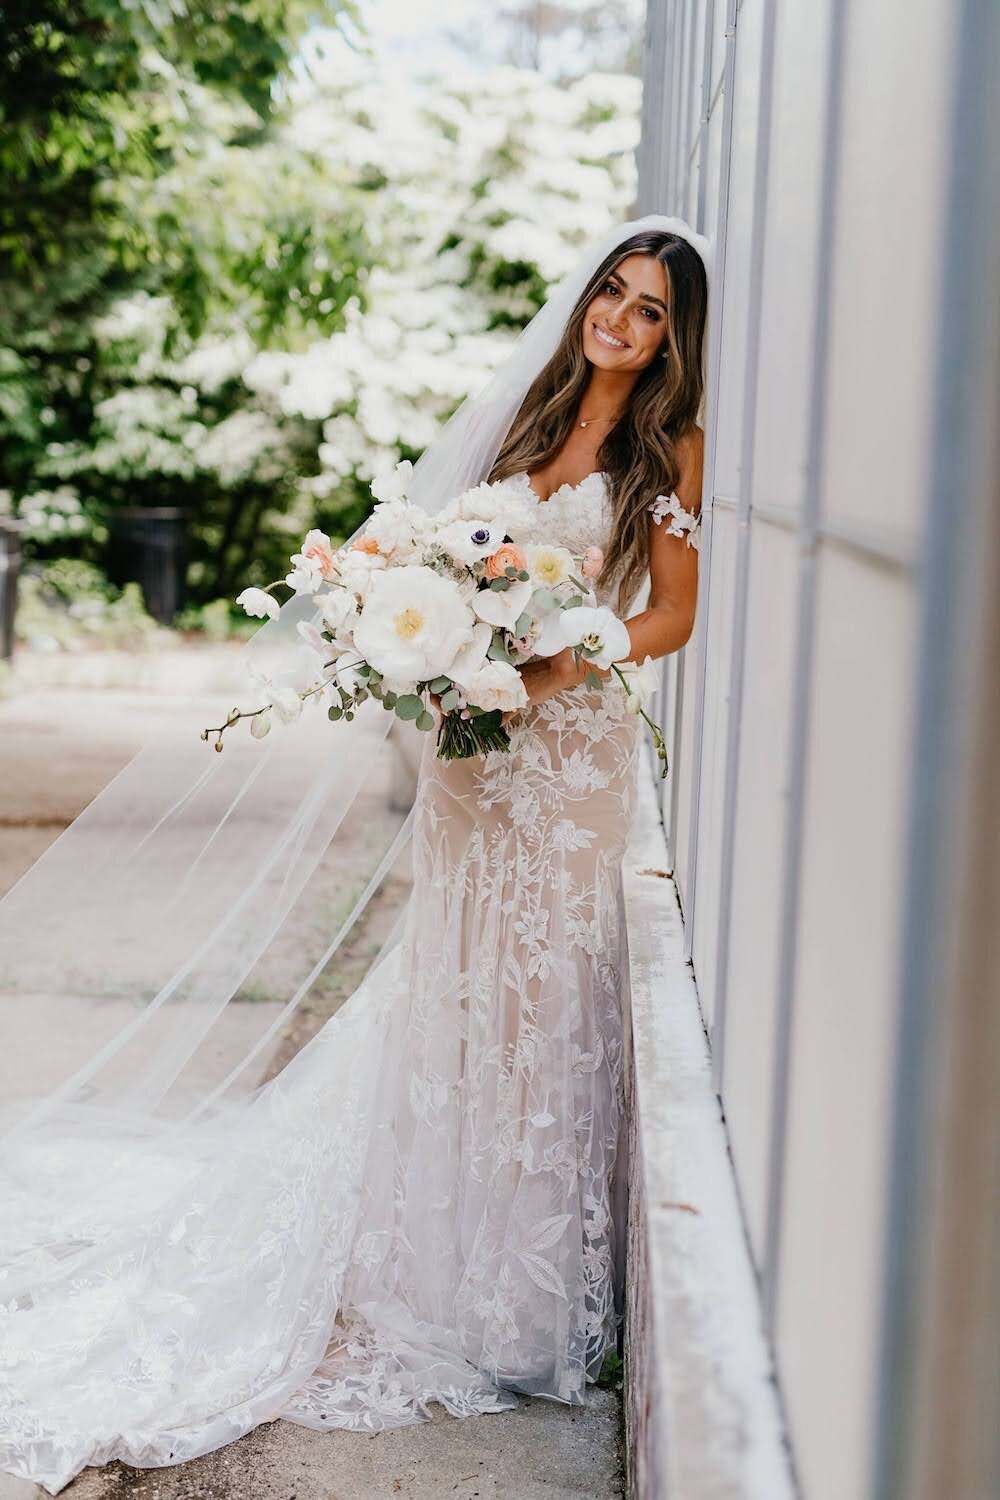 Melissa-Logan-Whimsical-Greenhouse-Philadelphia-Wedding-flowers-by-Sebesta-Design11